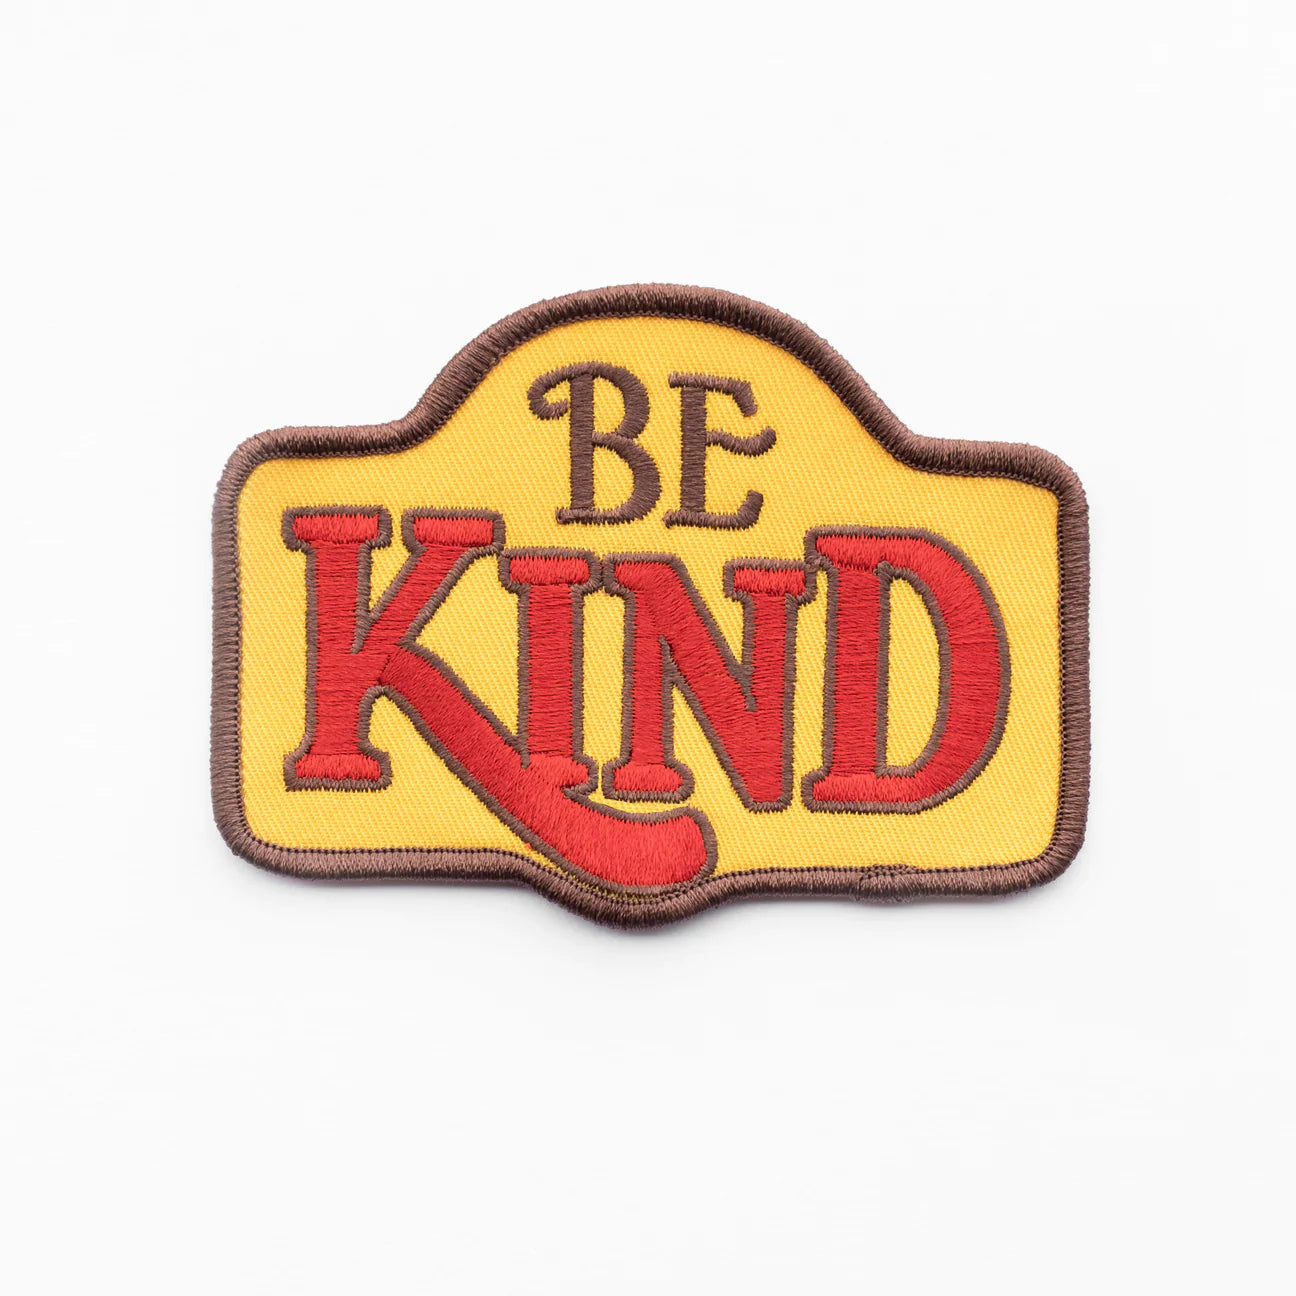 Be Kind Patch - Birch Hill Studio